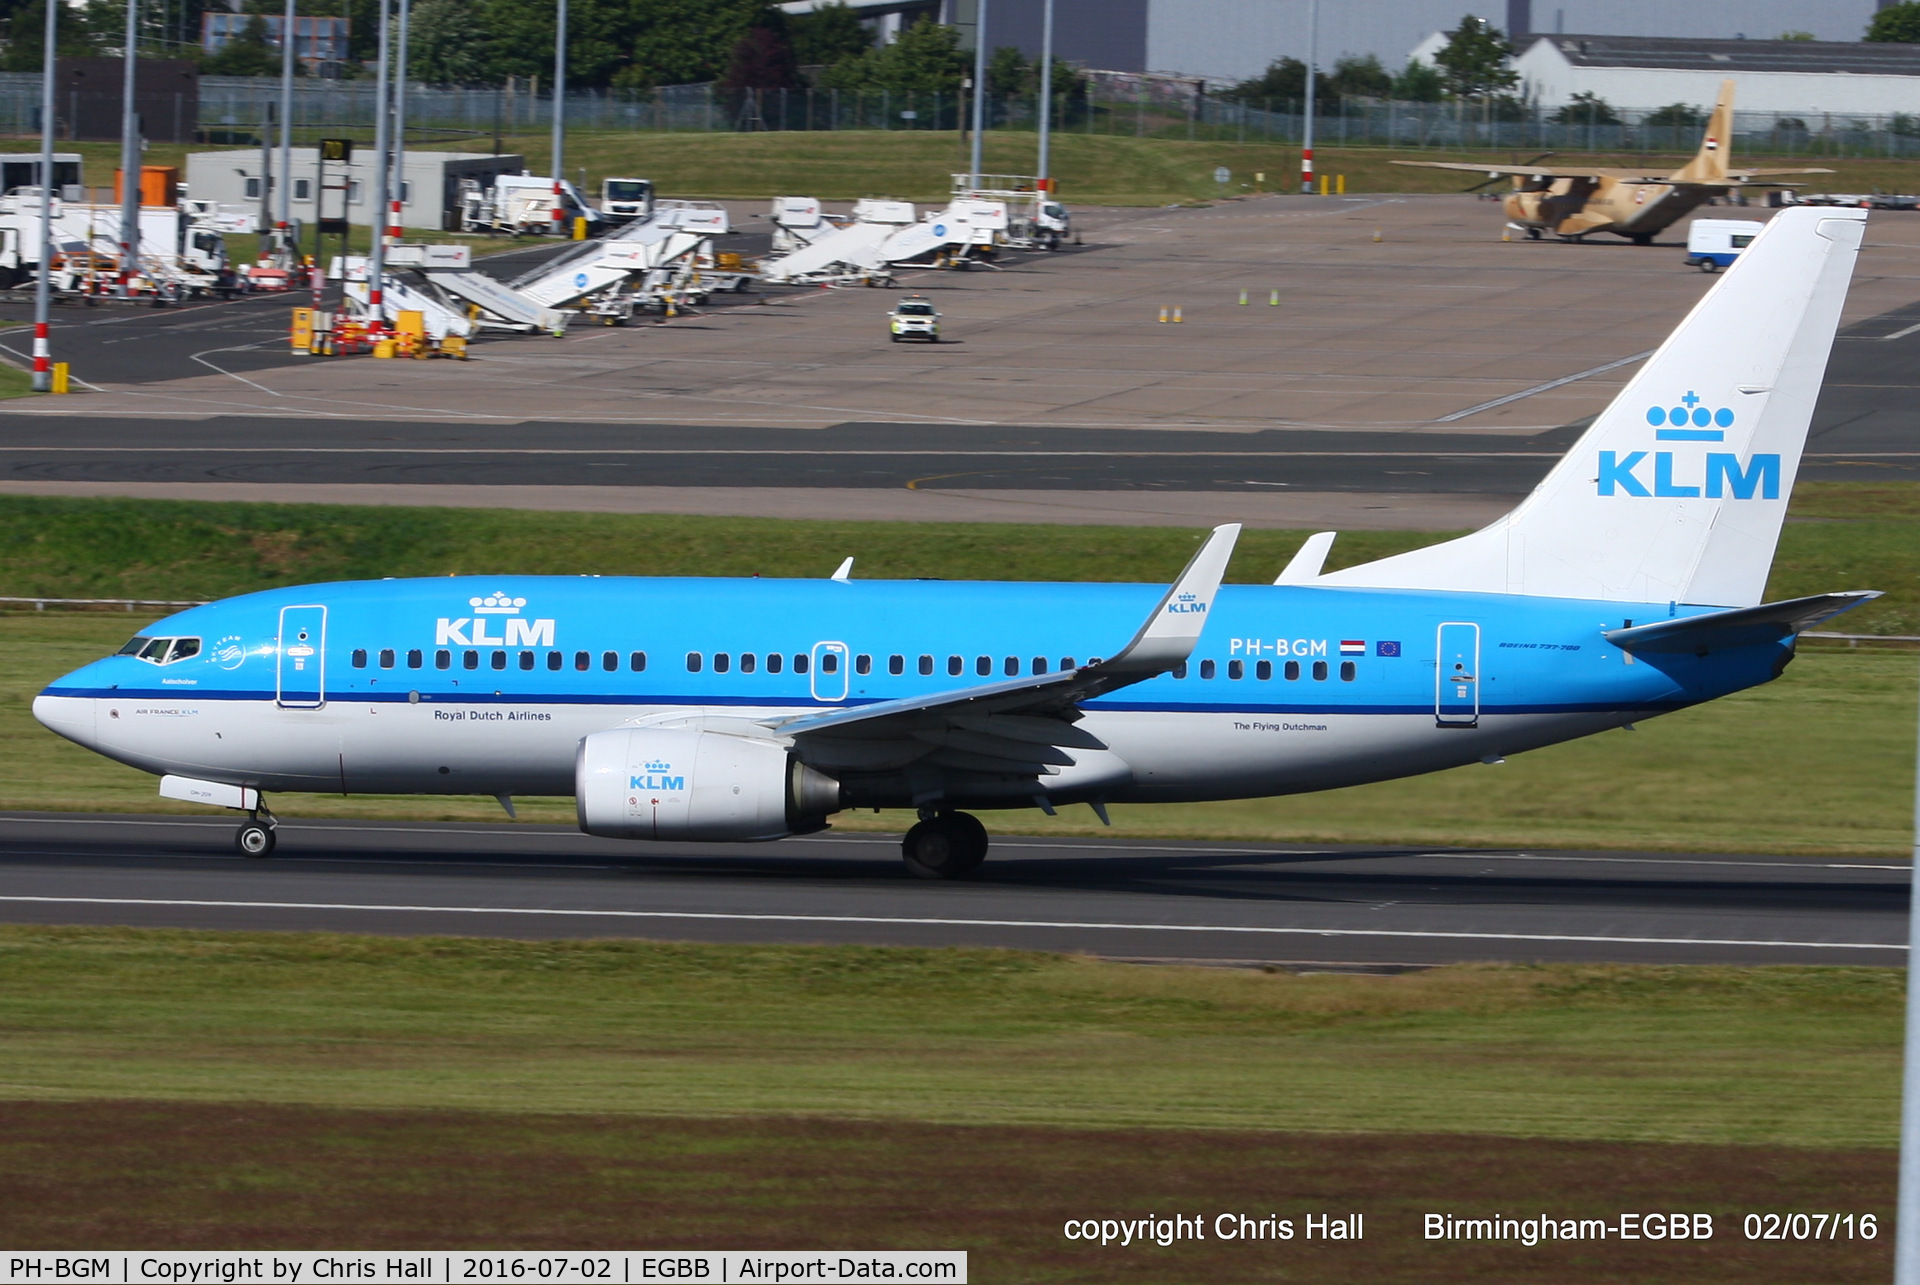 PH-BGM, 2011 Boeing 737-7K2 C/N 39255, KLM Royal Dutch Airlines